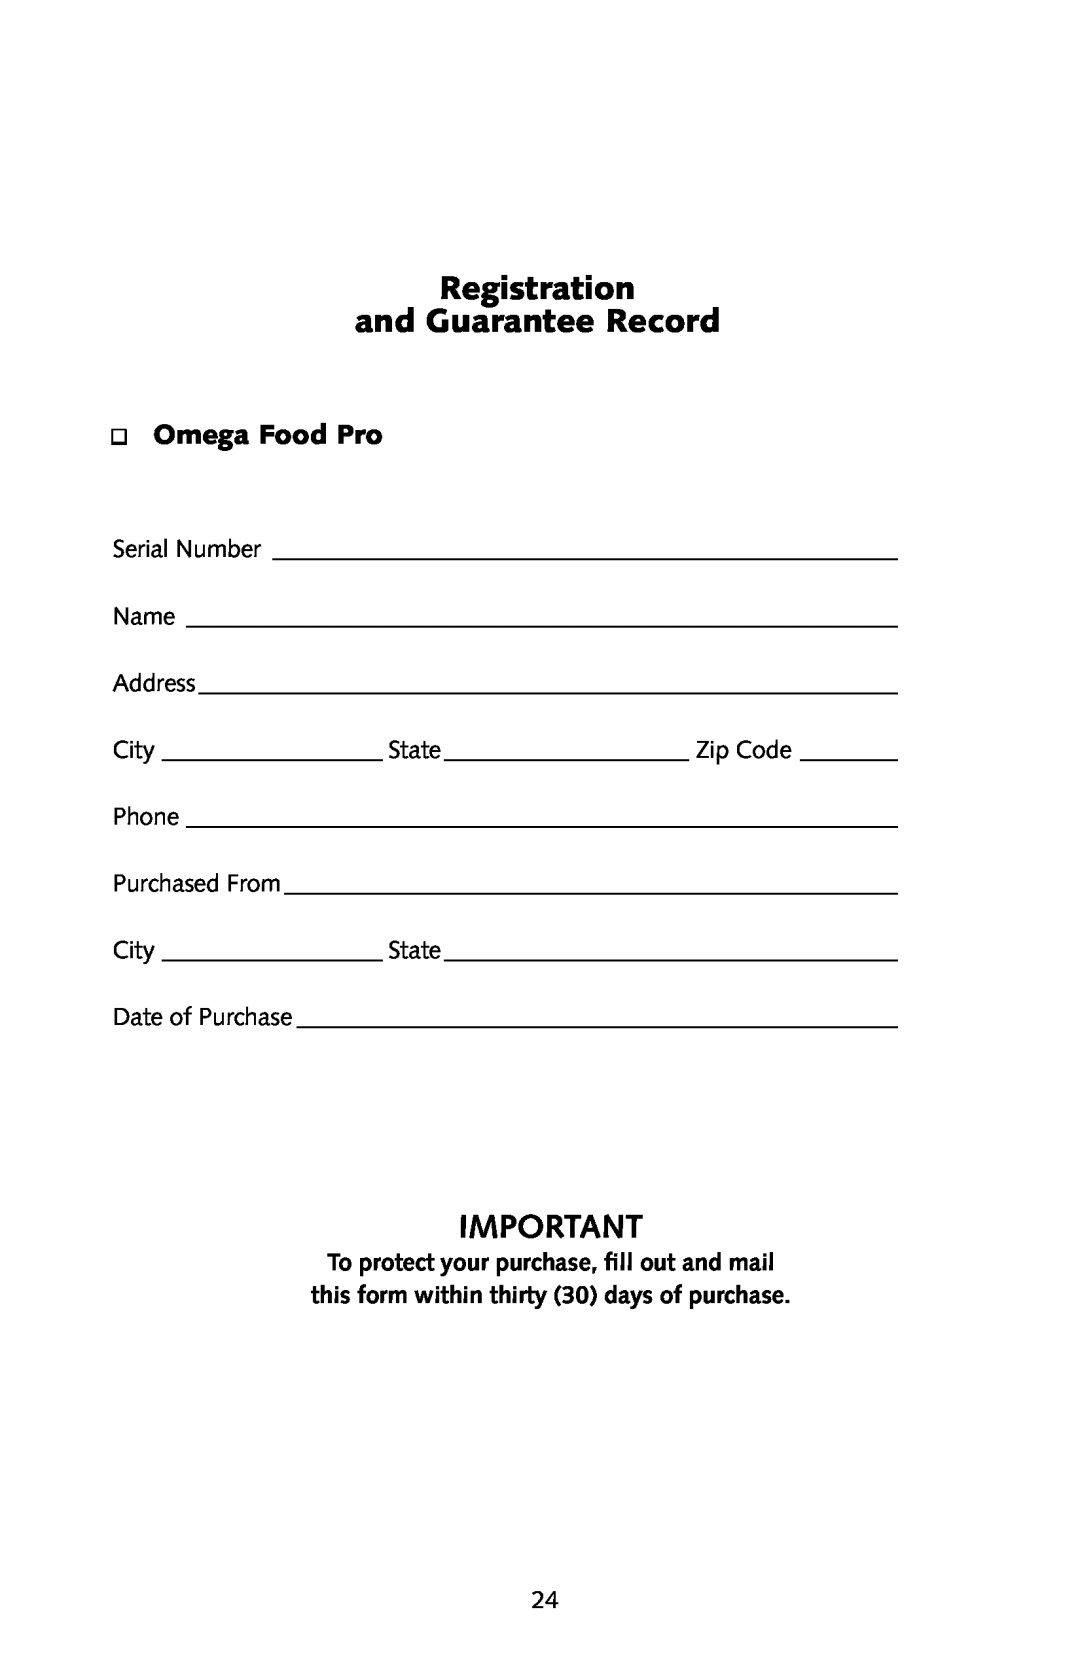 Omega FoodPro instruction manual Registration and Guarantee Record, Omega Food Pro 